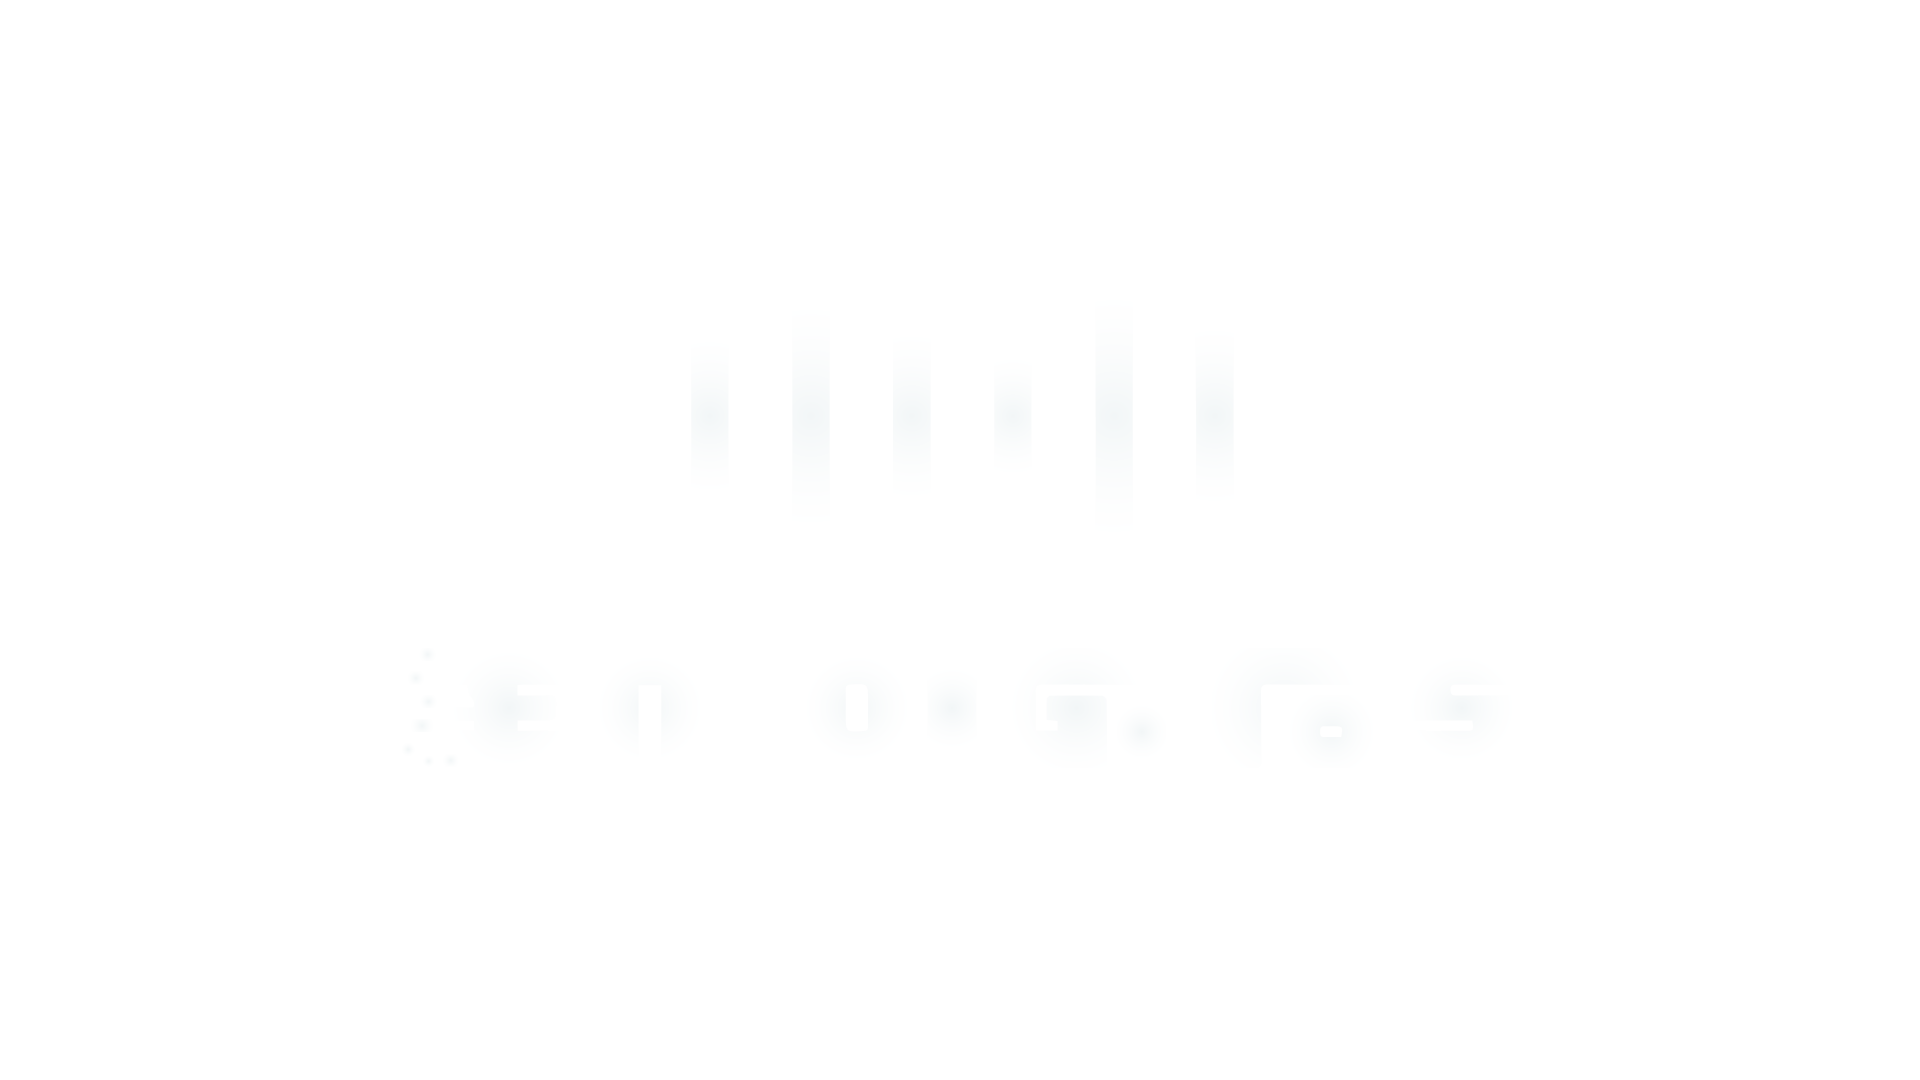 Endigitos Media